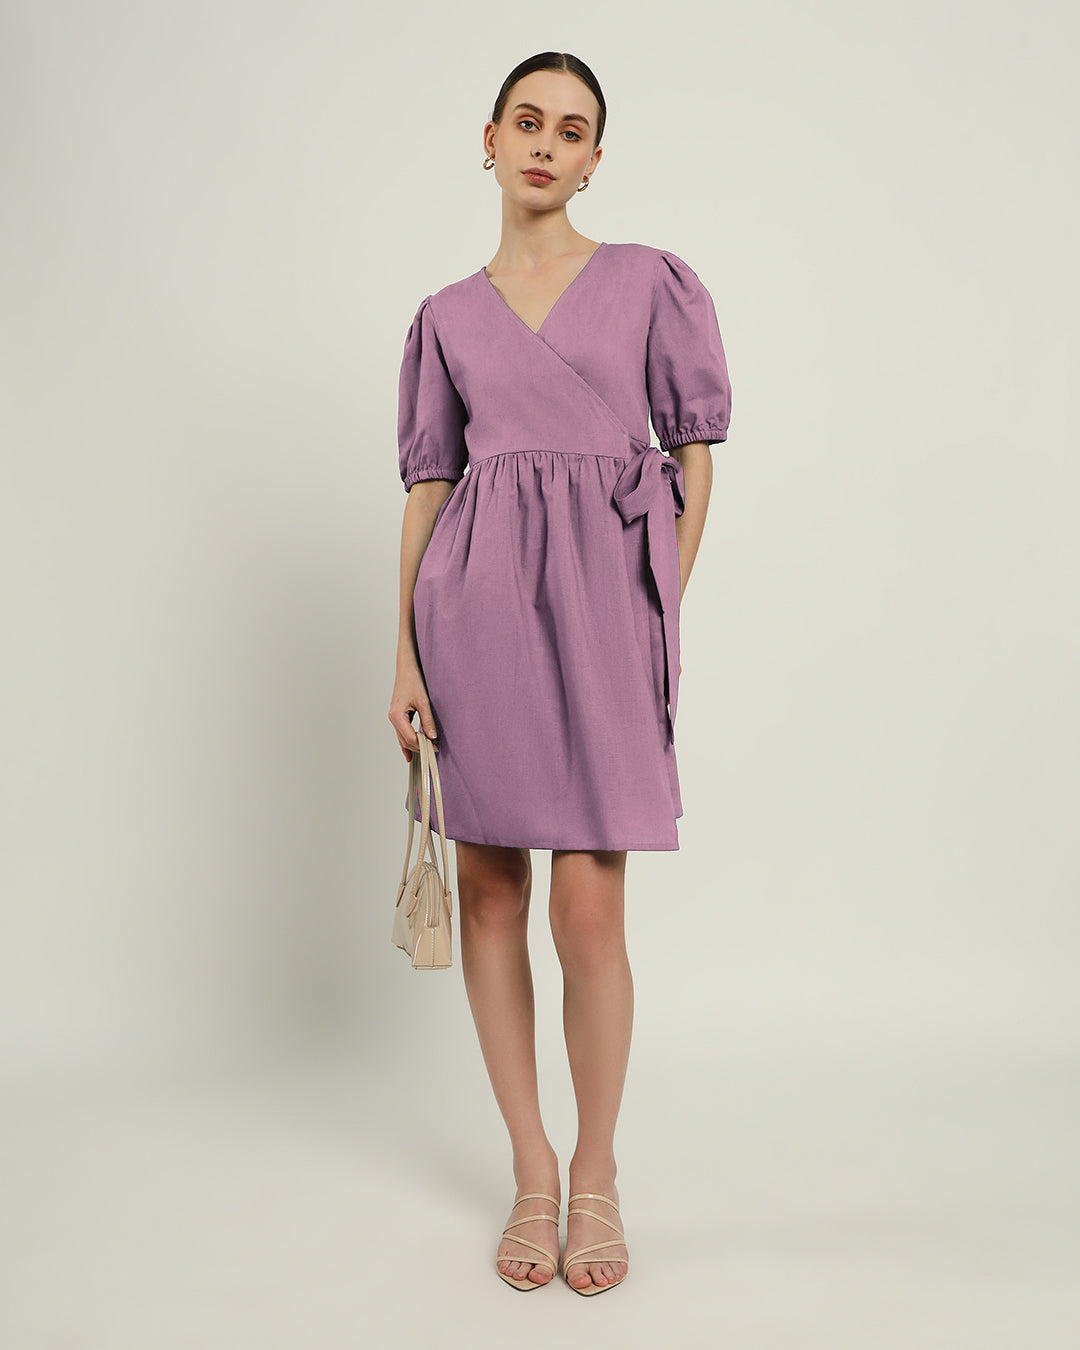 The Inzai Purple Swirl Dress